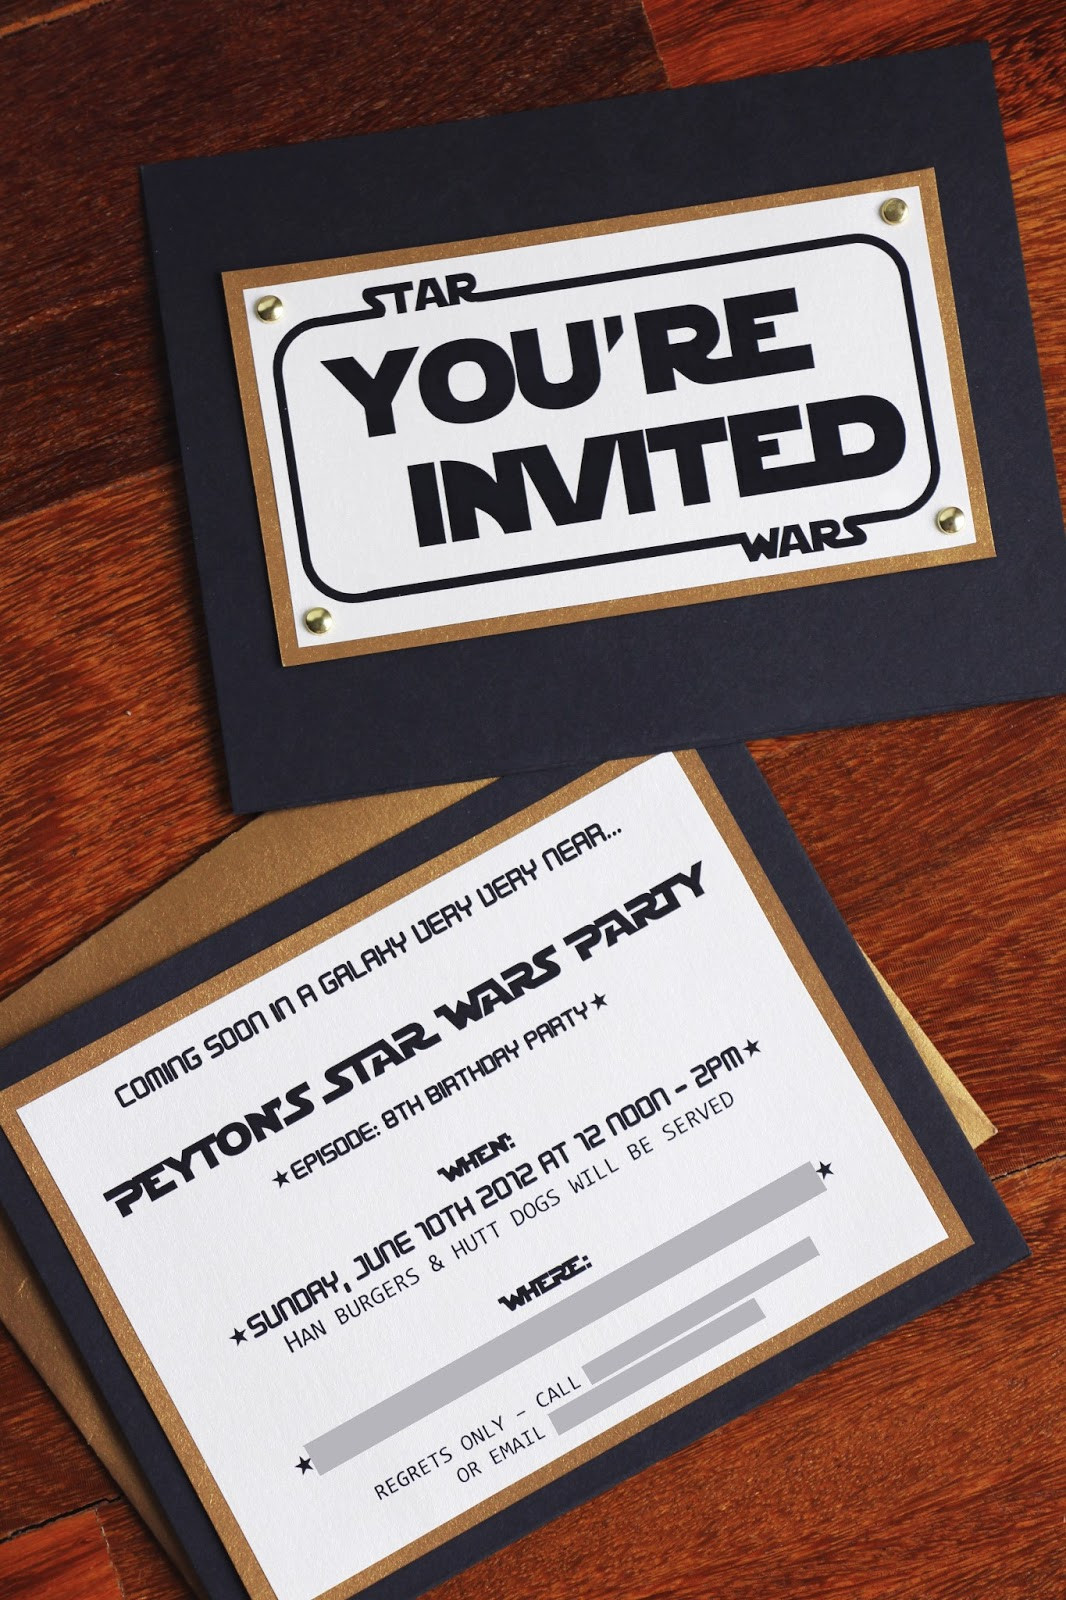 Star Wars Birthday Party Invitation
 The Contemplative Creative Star Wars Party Invitation